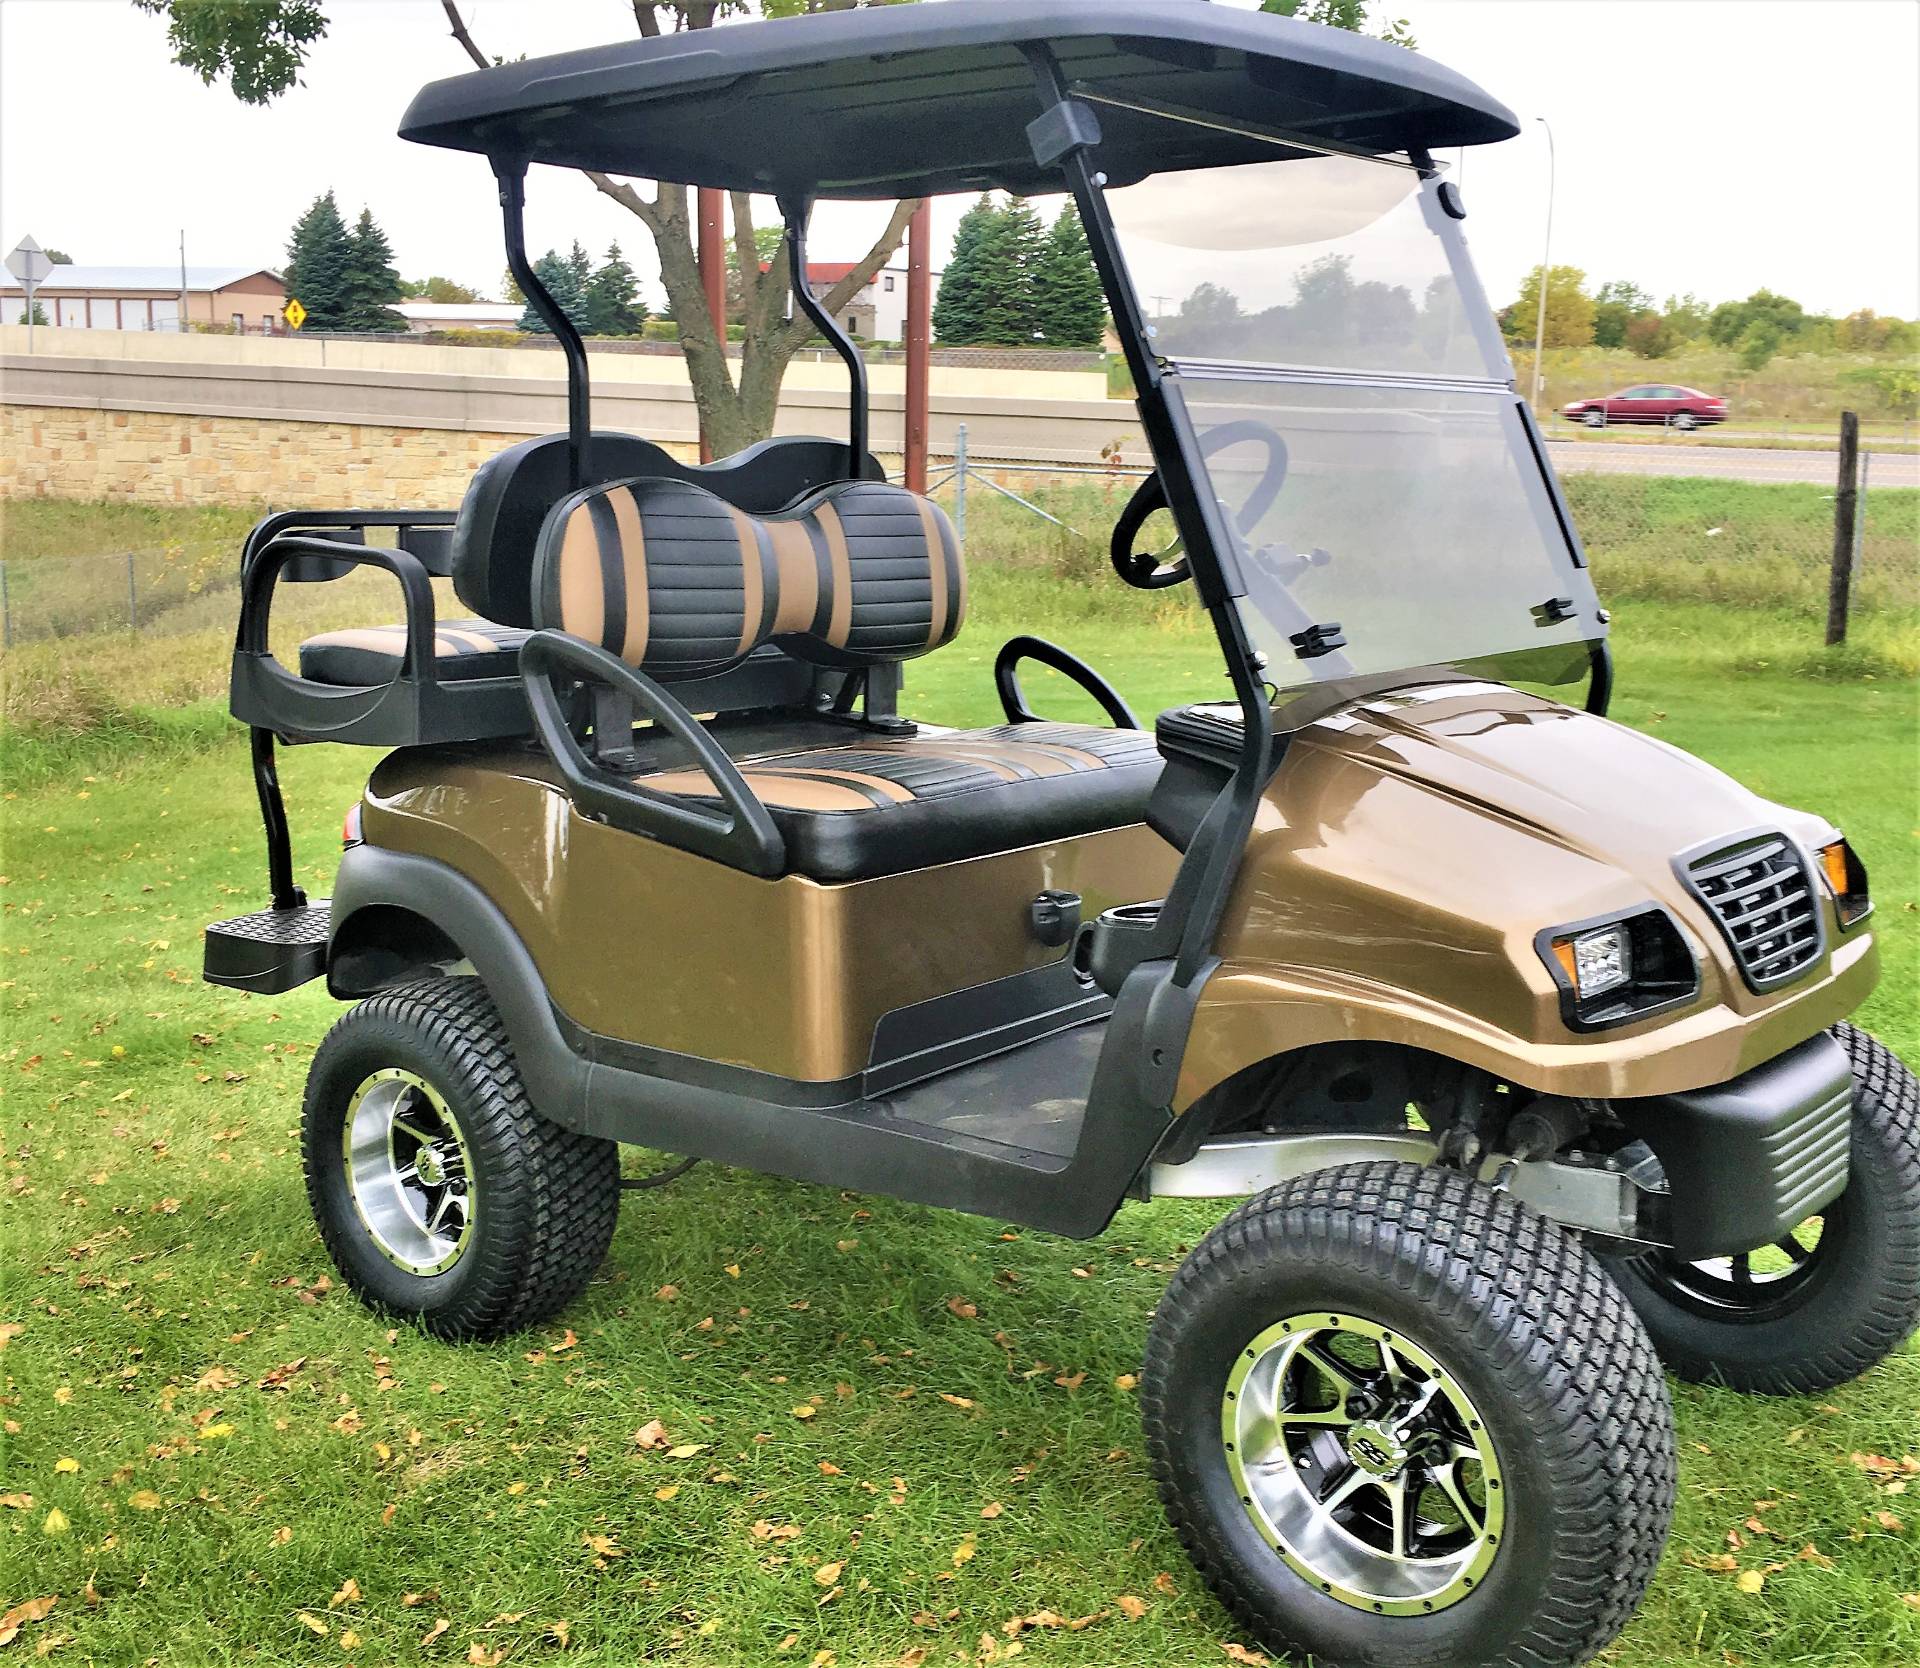 2015 Club Car Precedent Golf Carts Rogers Minnesota BTO528312